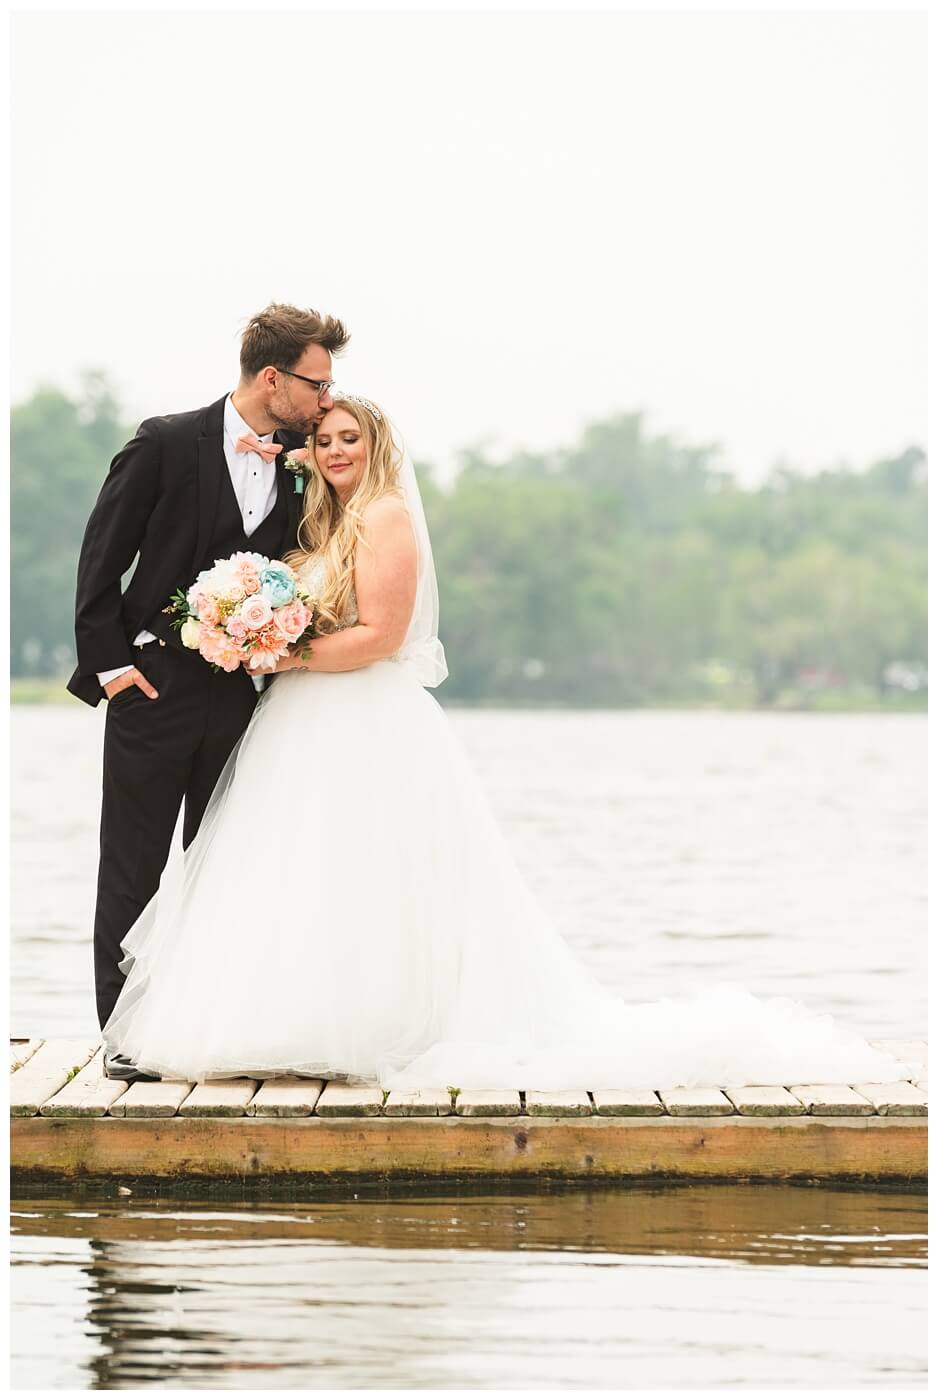 Brett & Rachelle - Delta Regina Wedding - 12 - Husband kissing wife's forehead on dock by Wascana